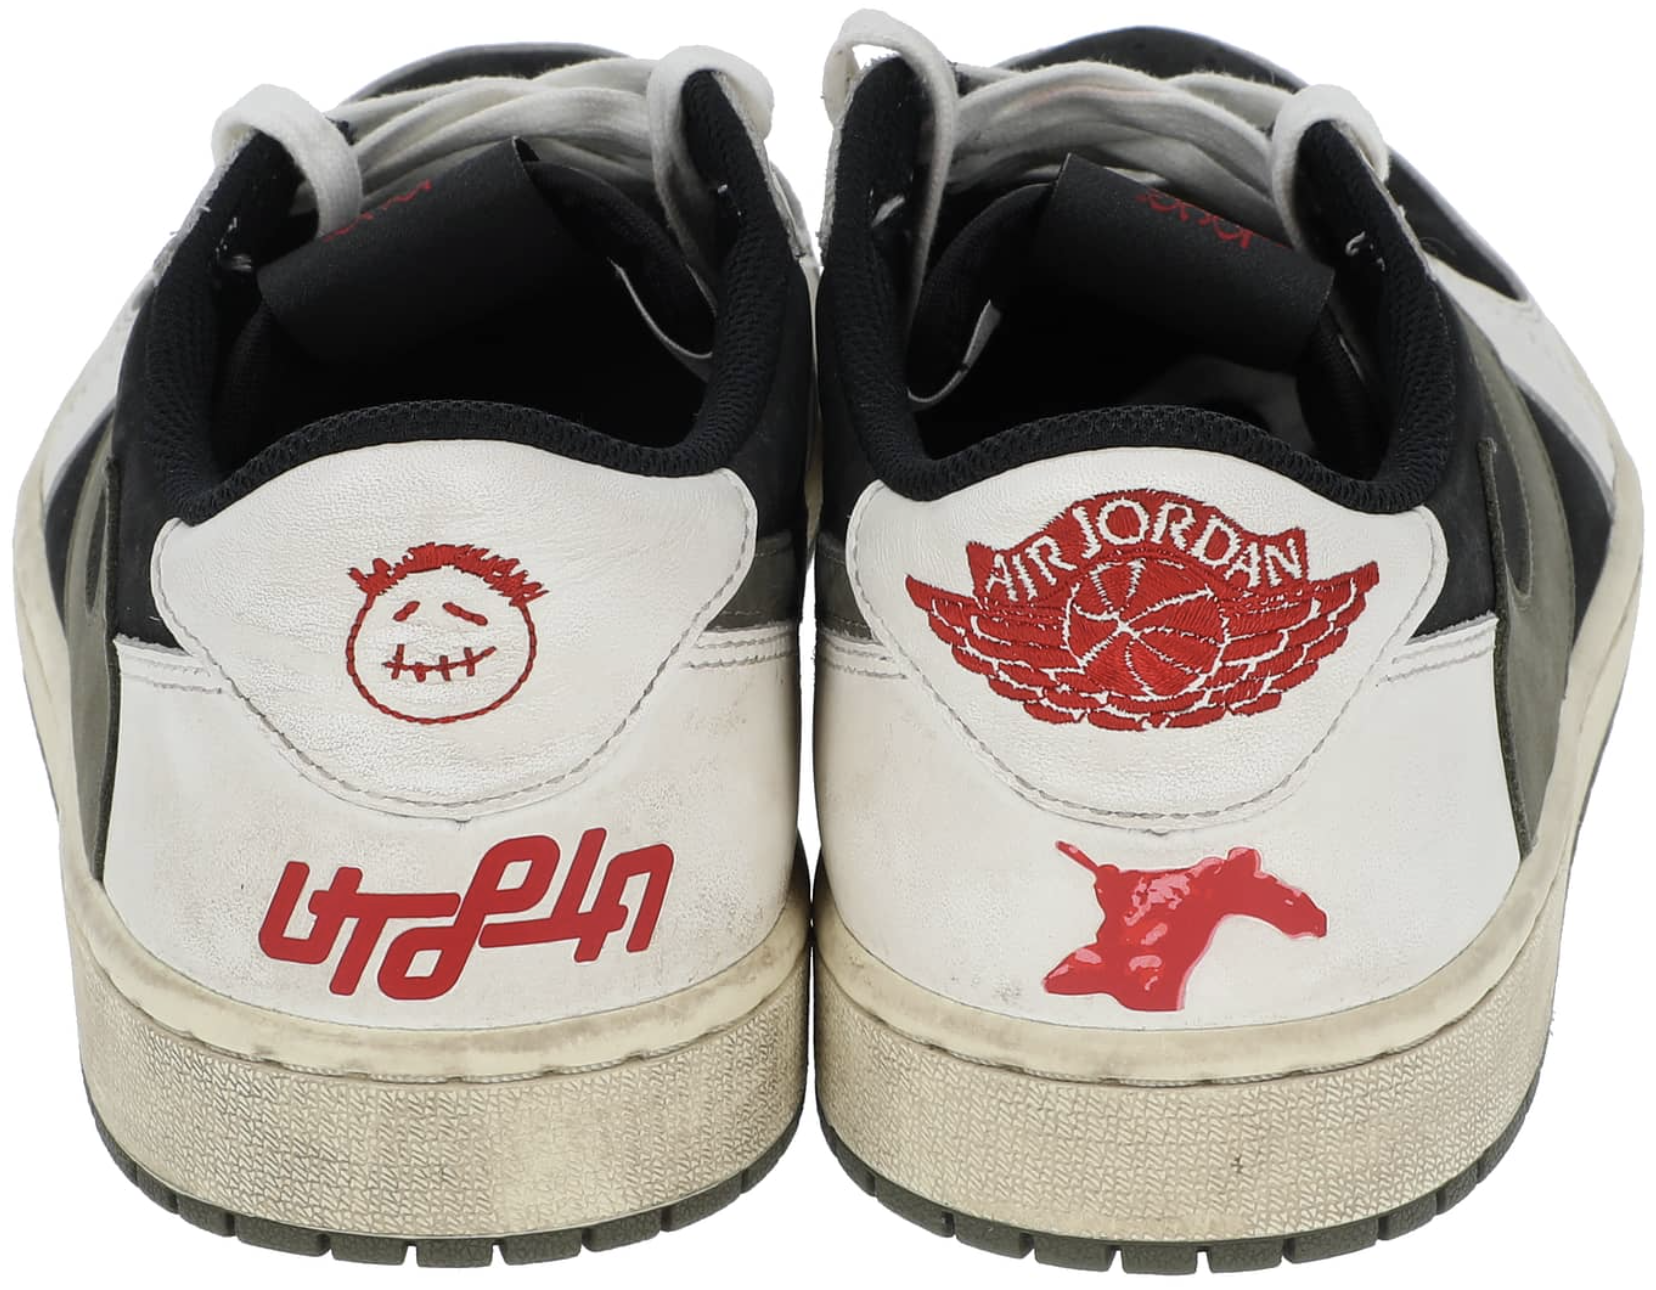 Travis Scott x Air Jordan 1 Low 'Utopia' Sample Auction | Complex